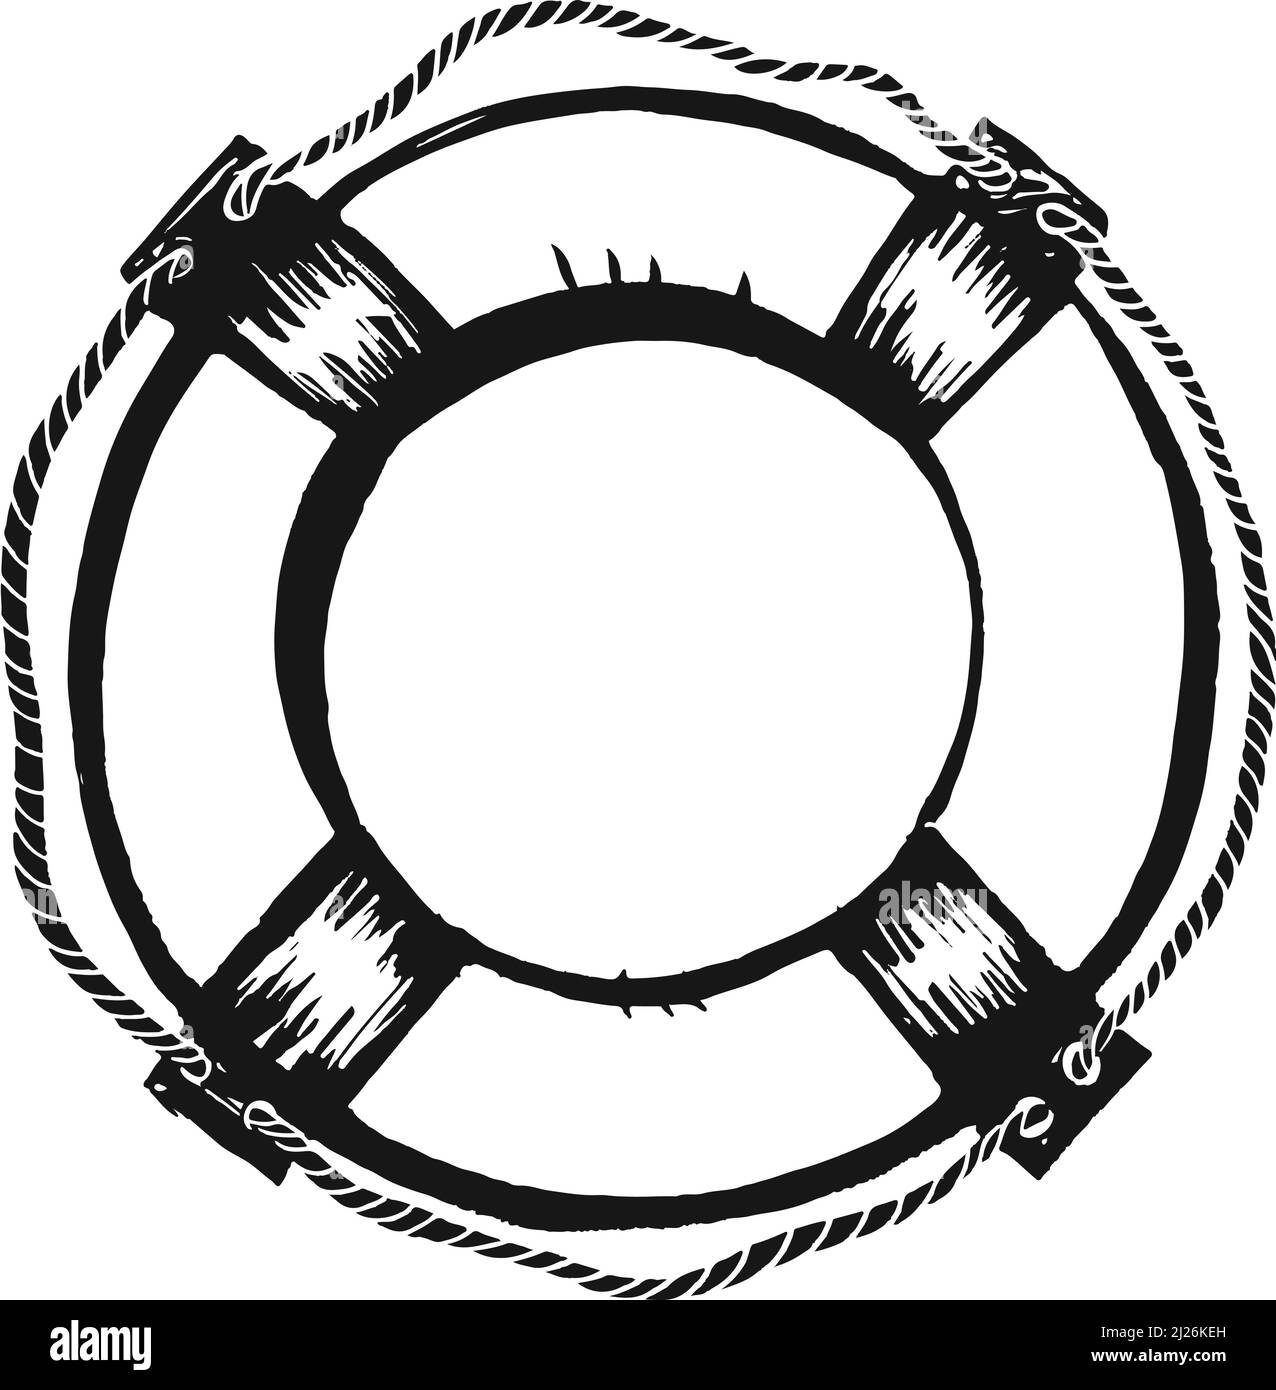 Lifebuoy engraving. Lifesaver ring. Ship safety wheel Stock Vector